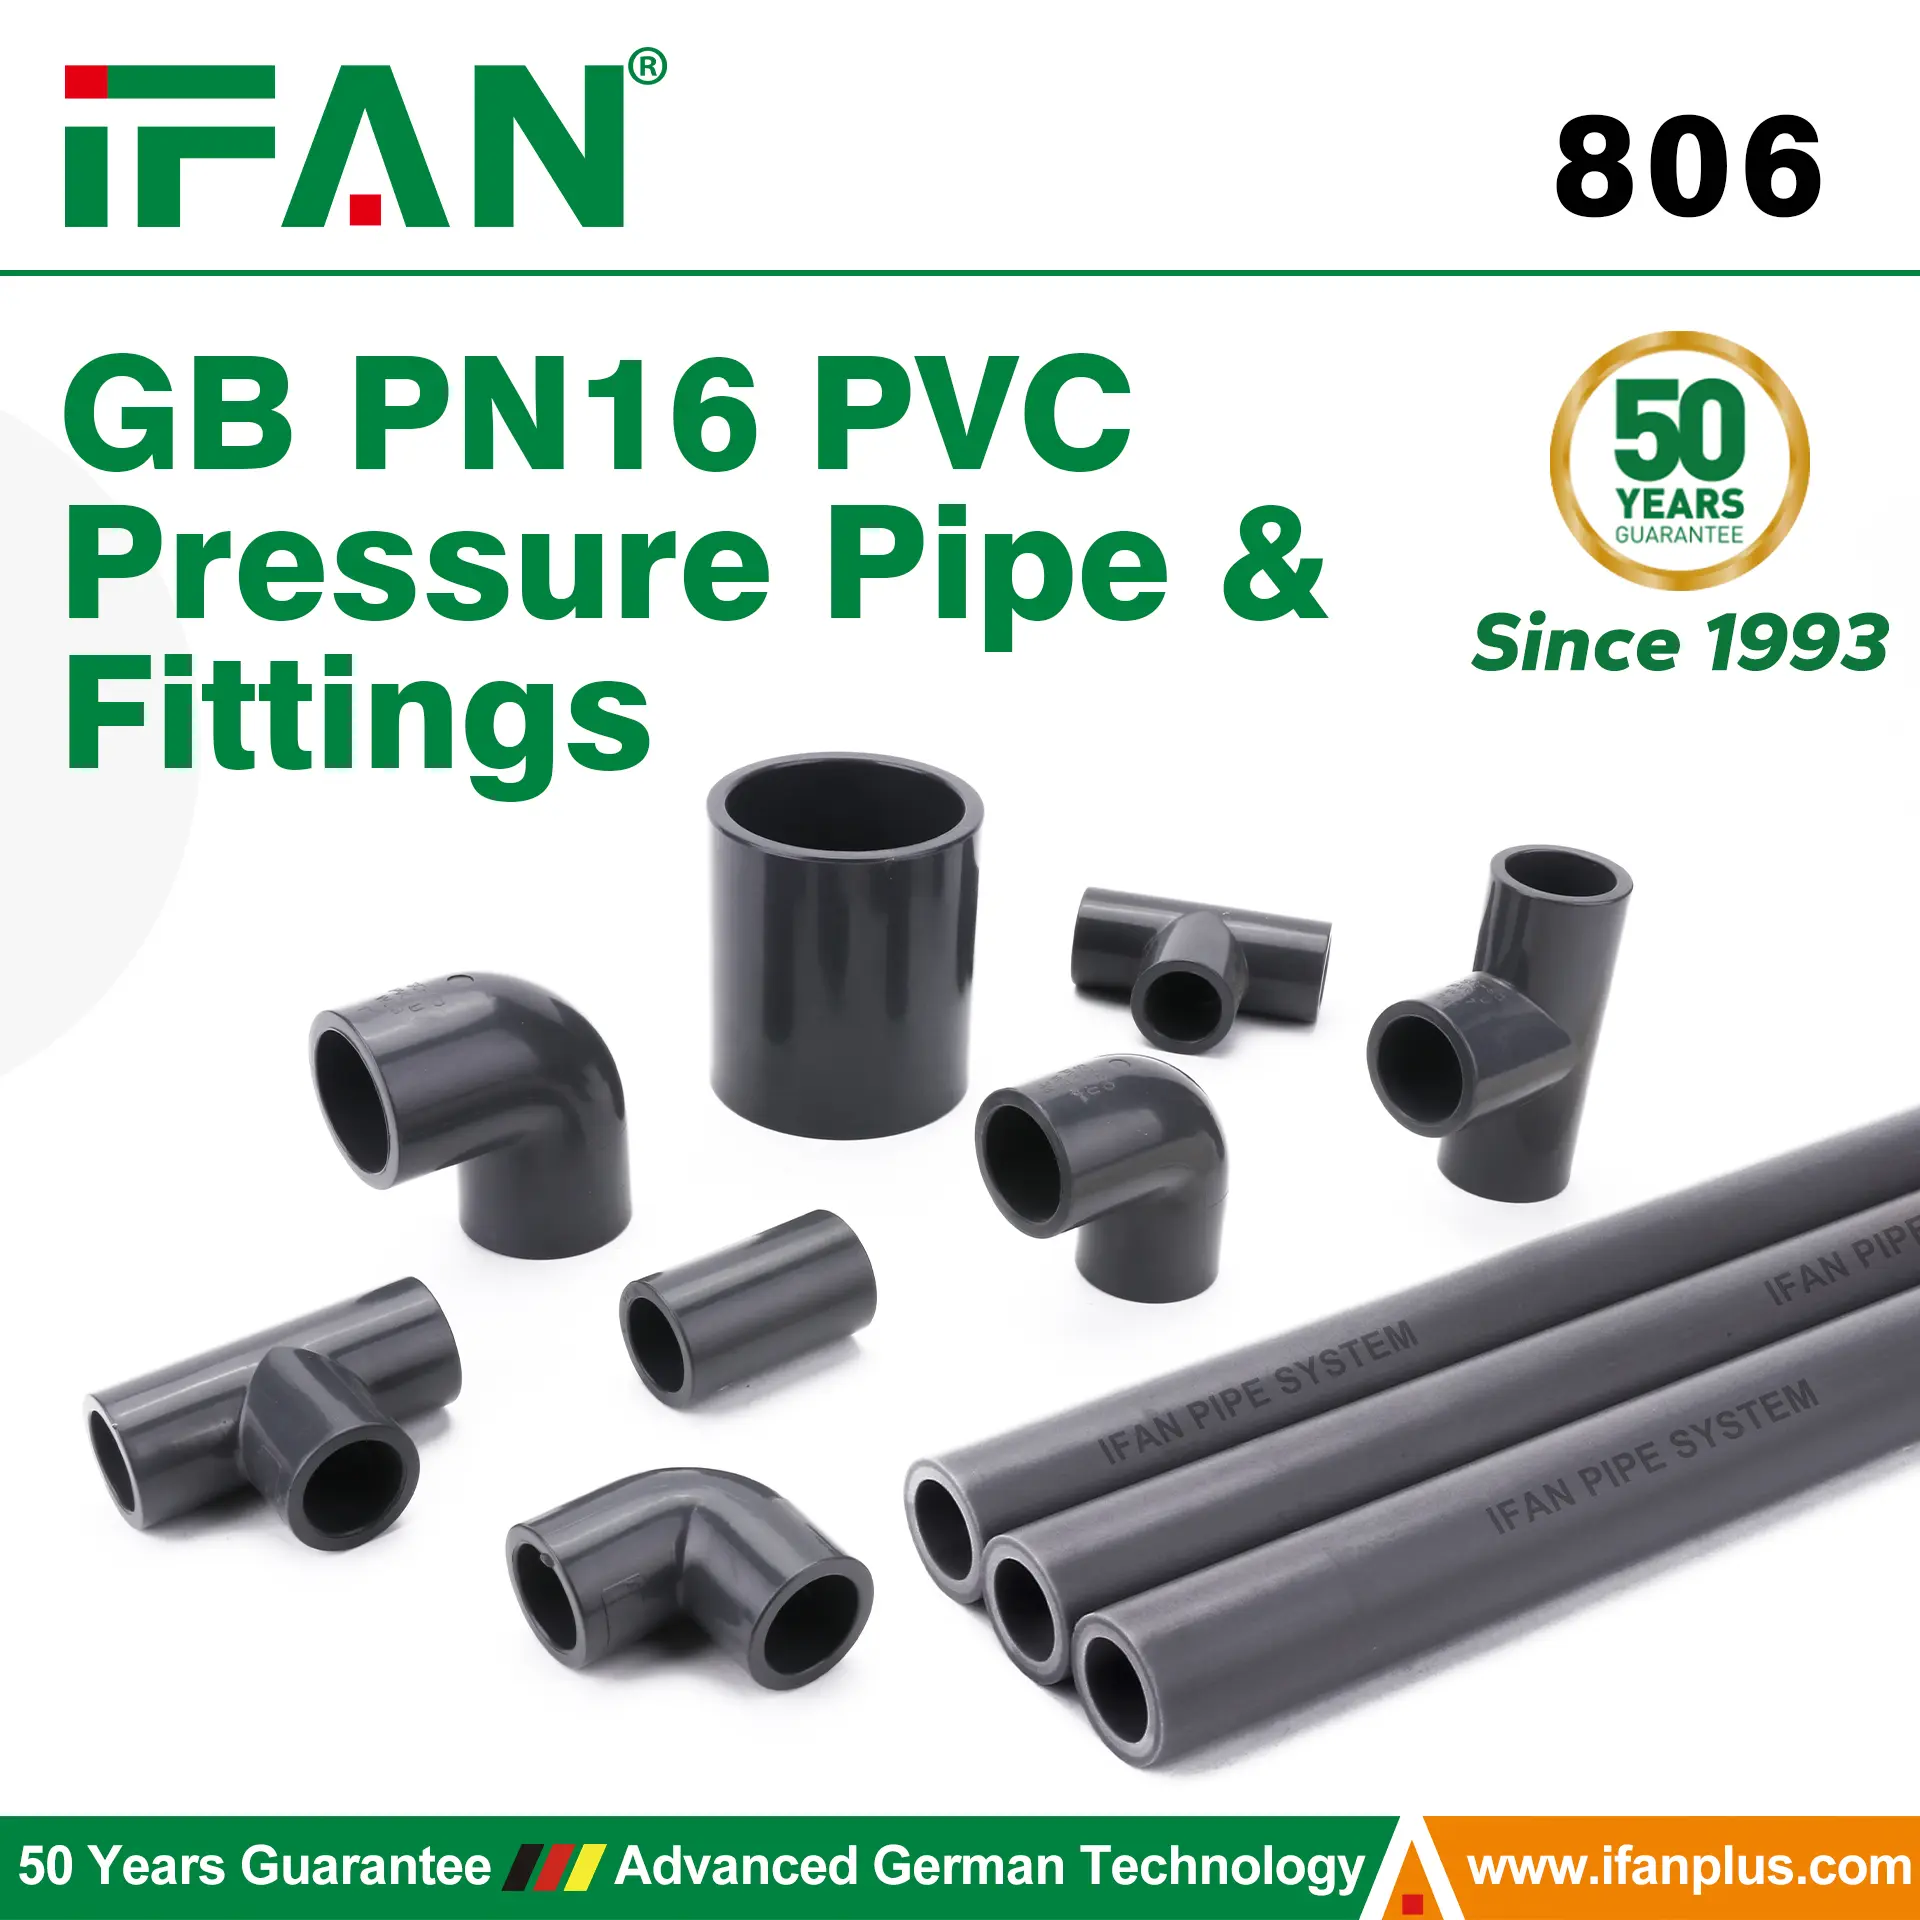 GB PN16 PVC Pressure Pipe And Fittings